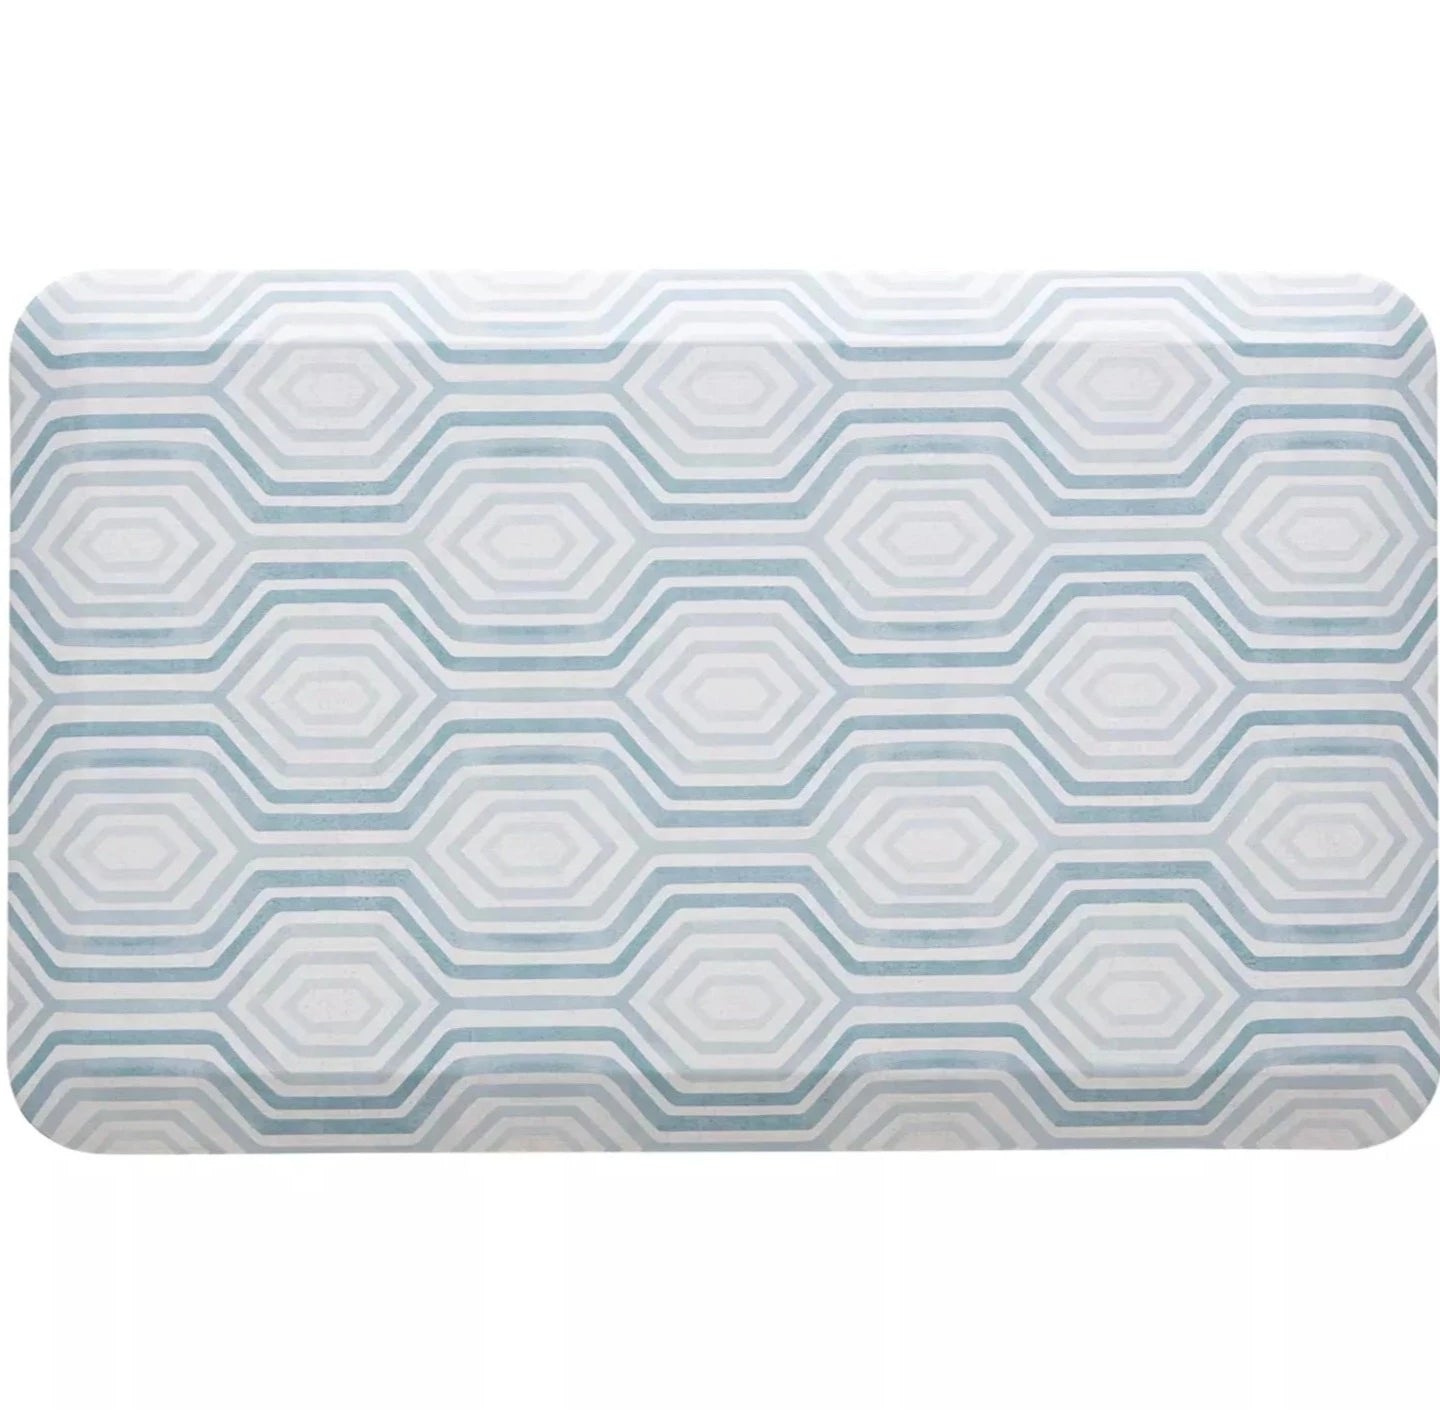 Blake waves blue and white mod preppy geometric print kitchen mat shown in size 20x32